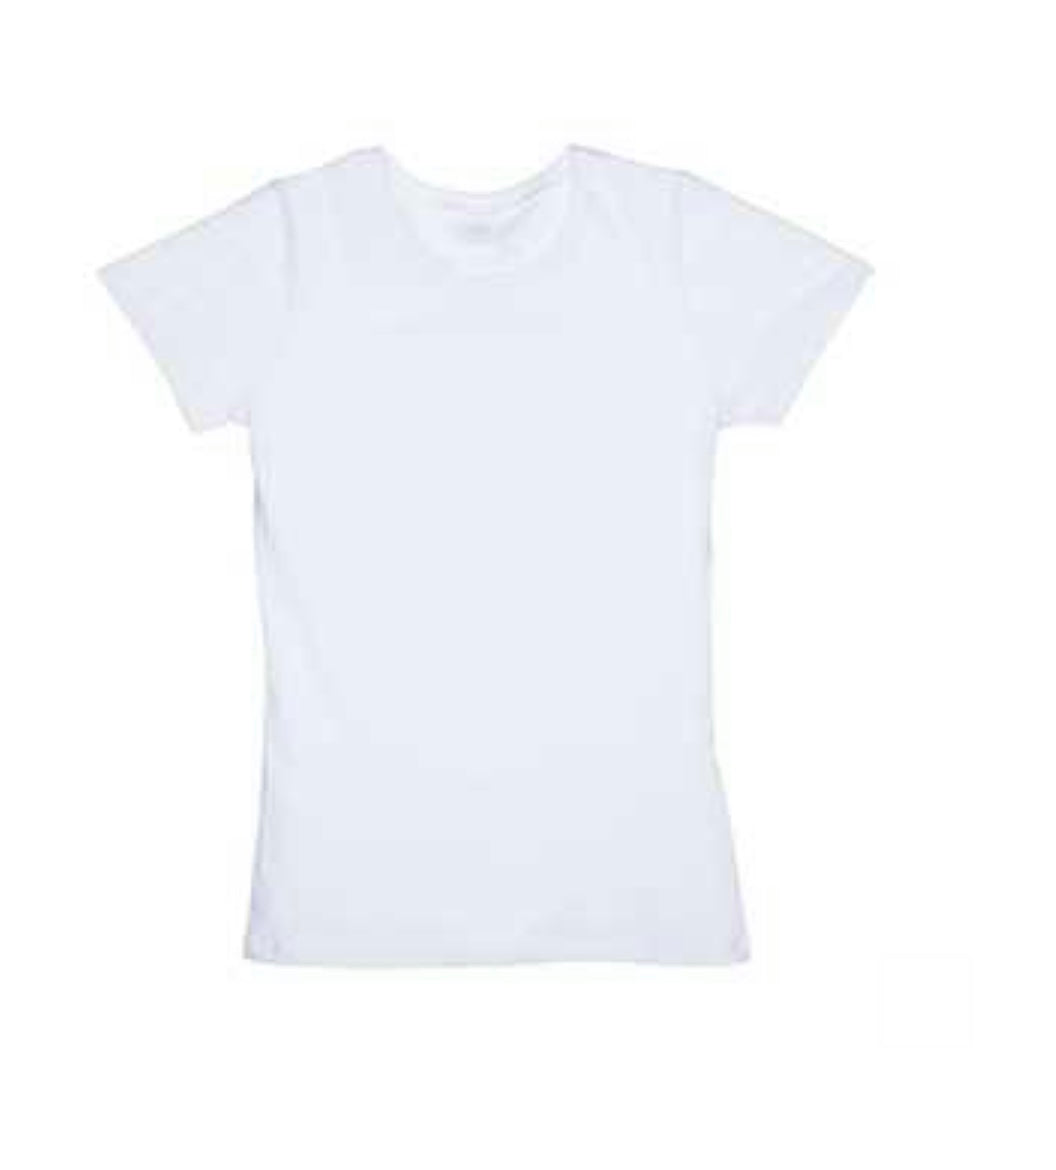 Customized KIDS T-shirt Black/White